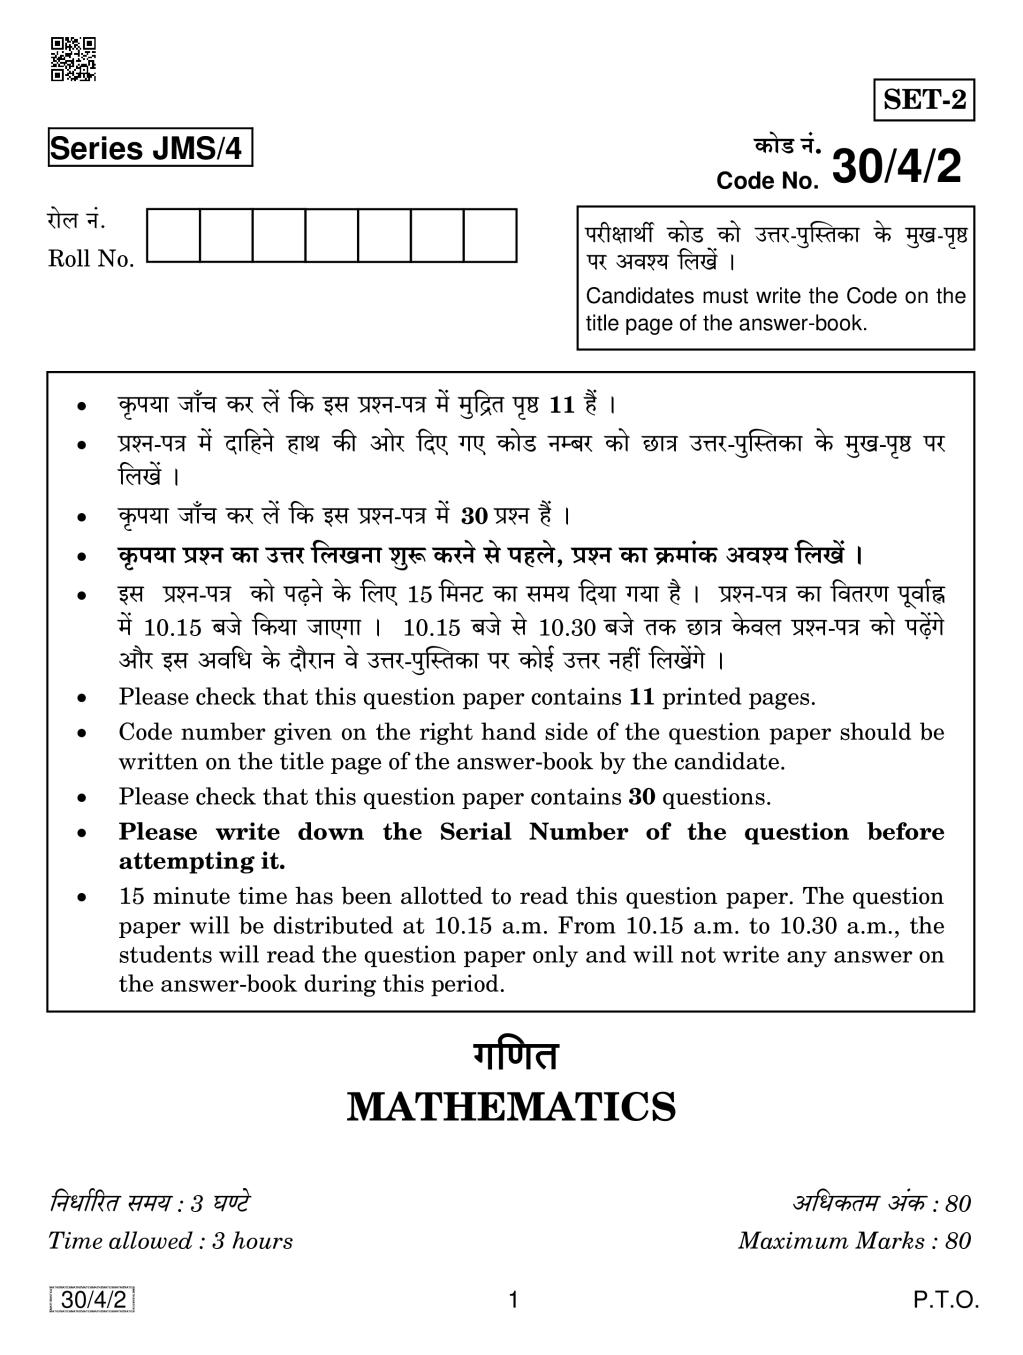 CBSE Class 10 Mathematics Question Paper 2019 Set 4 - Page 1